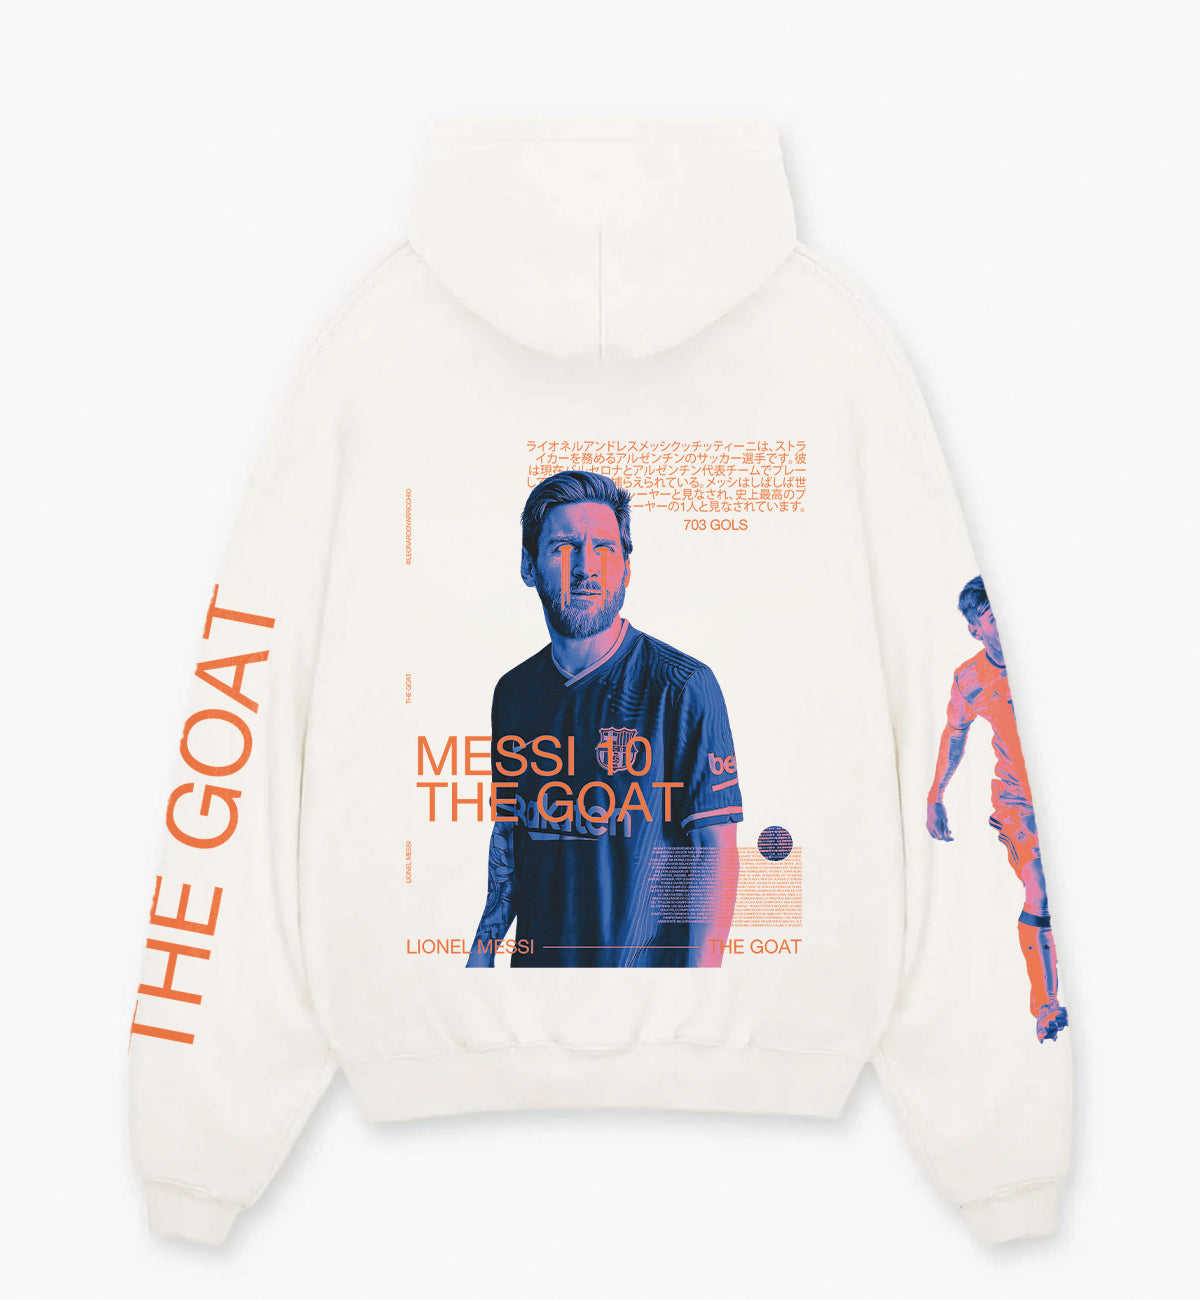 Messi Designed Oversized hoodie